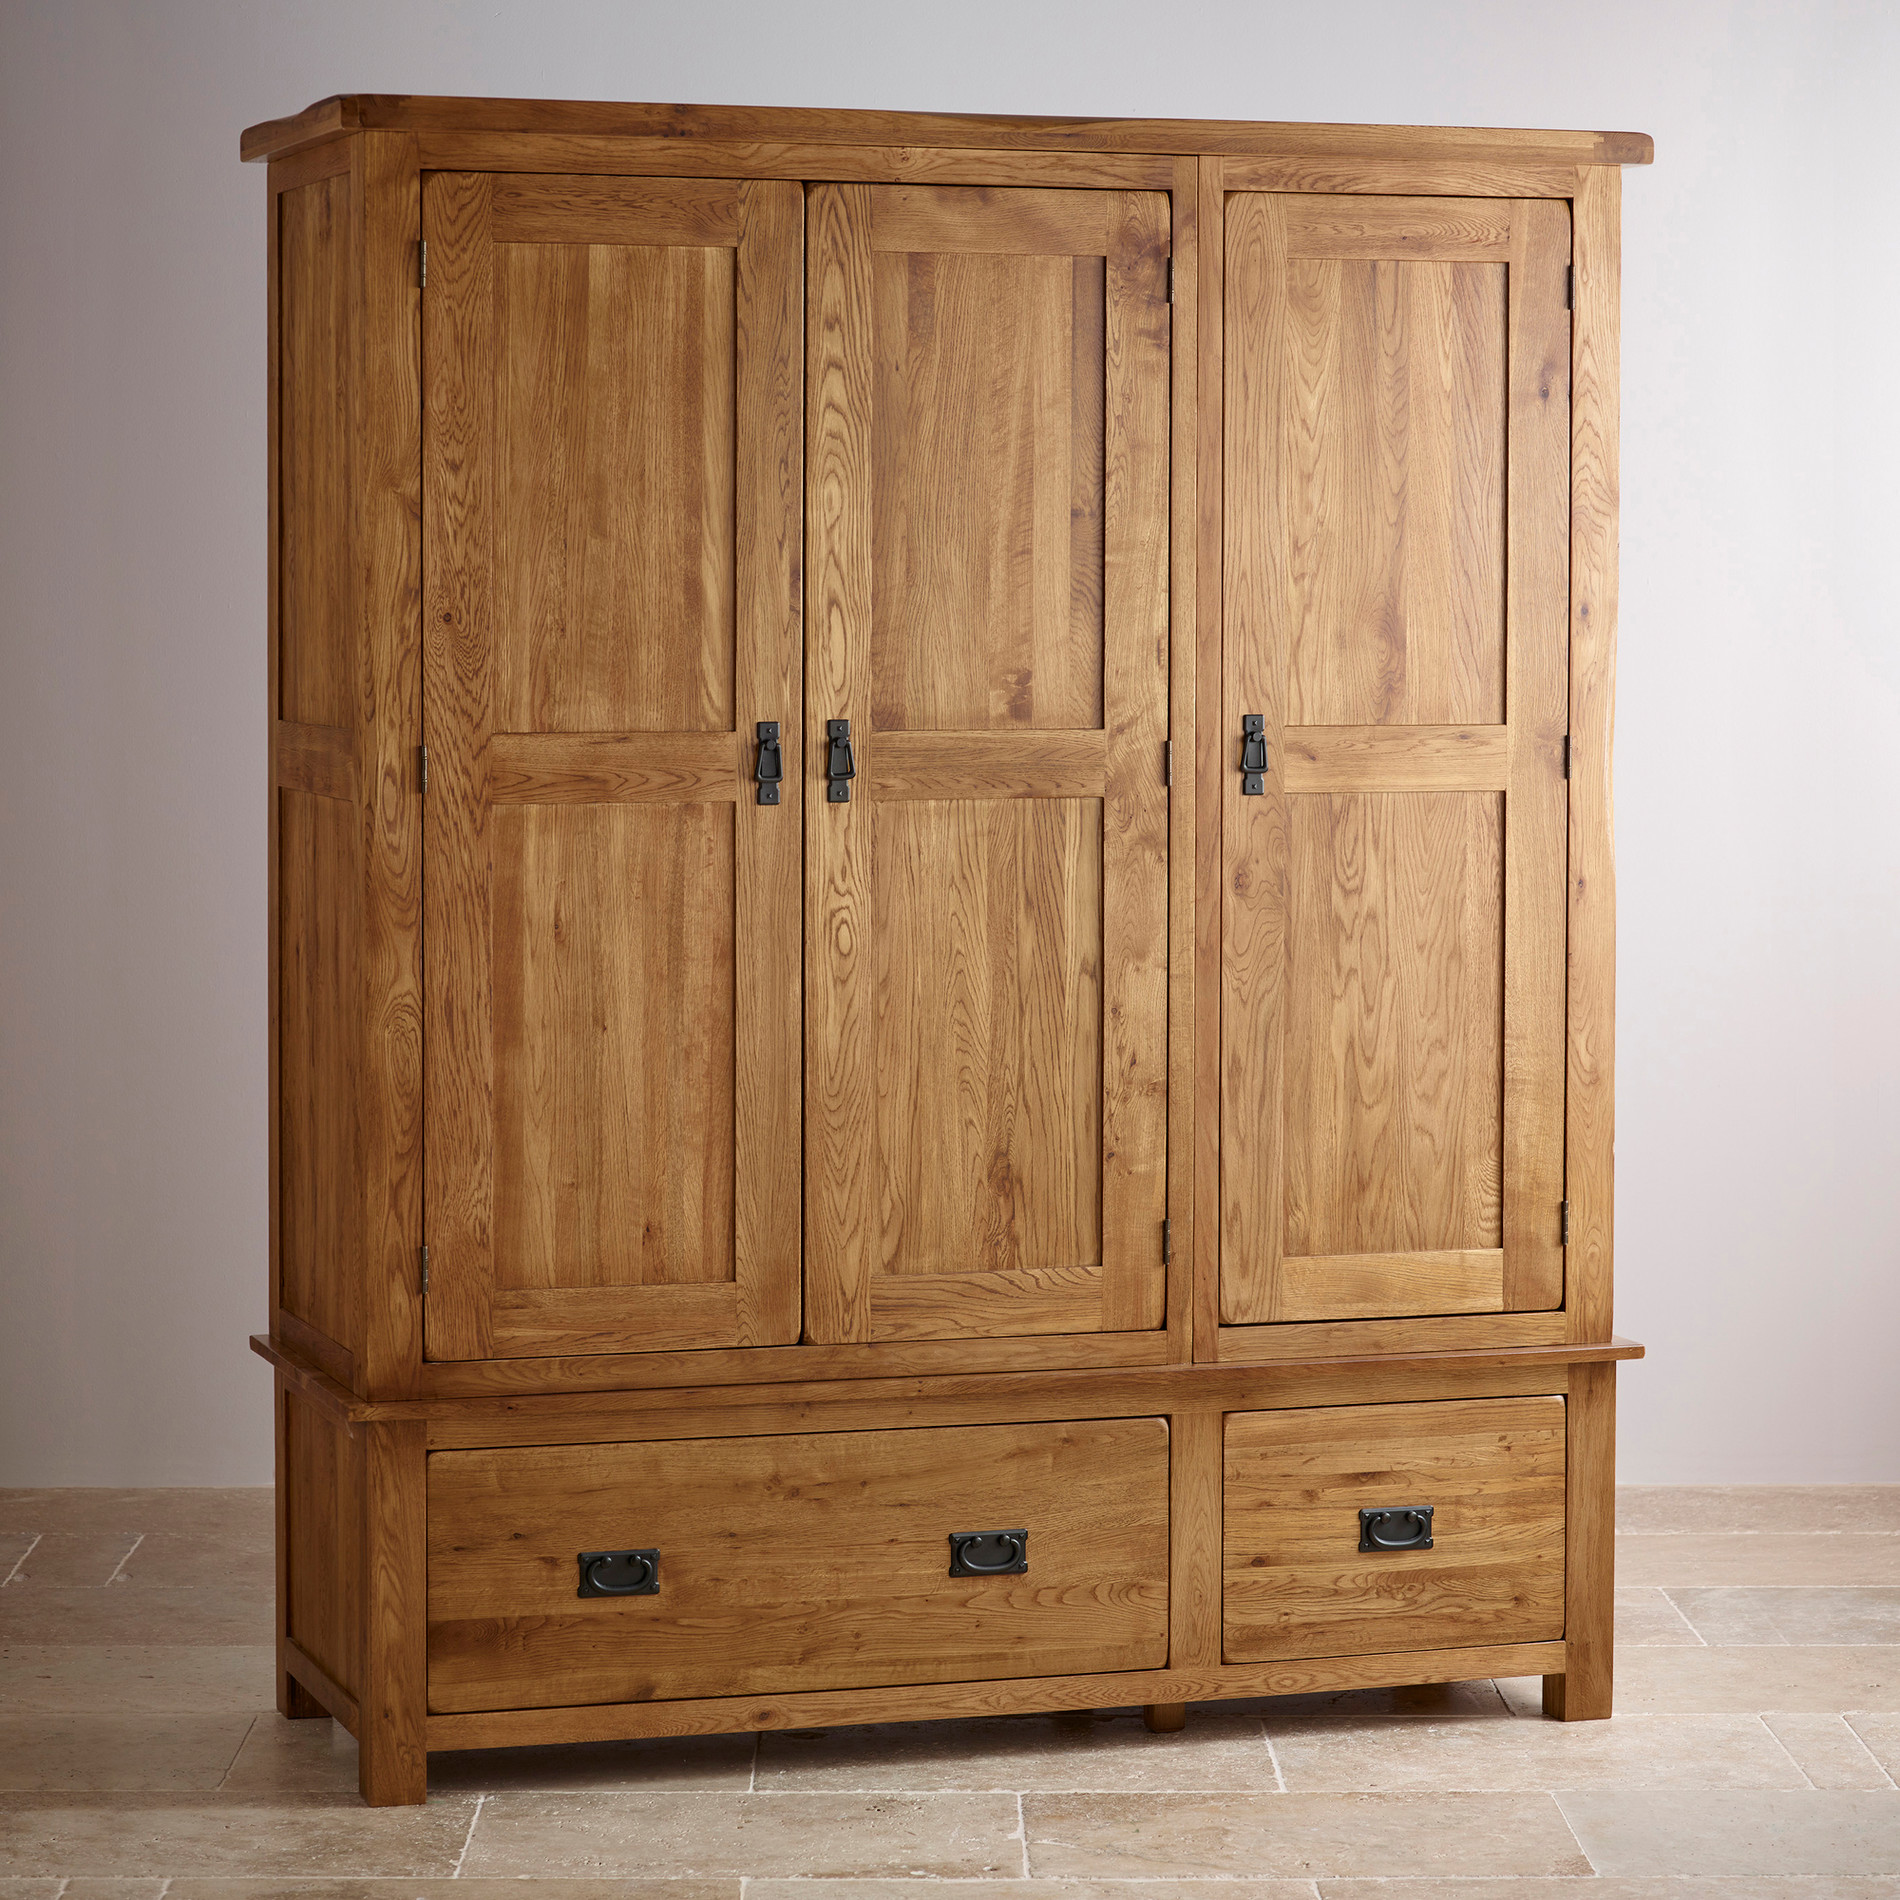 Original Rustic Solid Oak Triple Wardrobe Bedroom Furniture